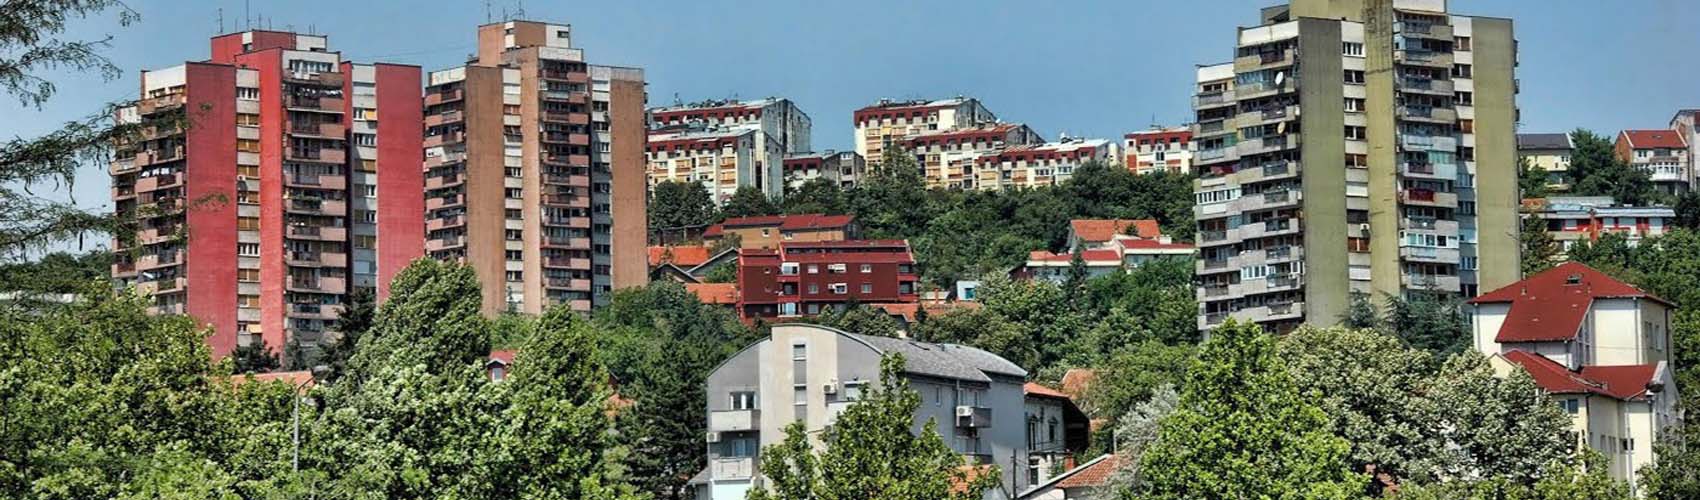 Registracija vozila Rakovica | Beograd